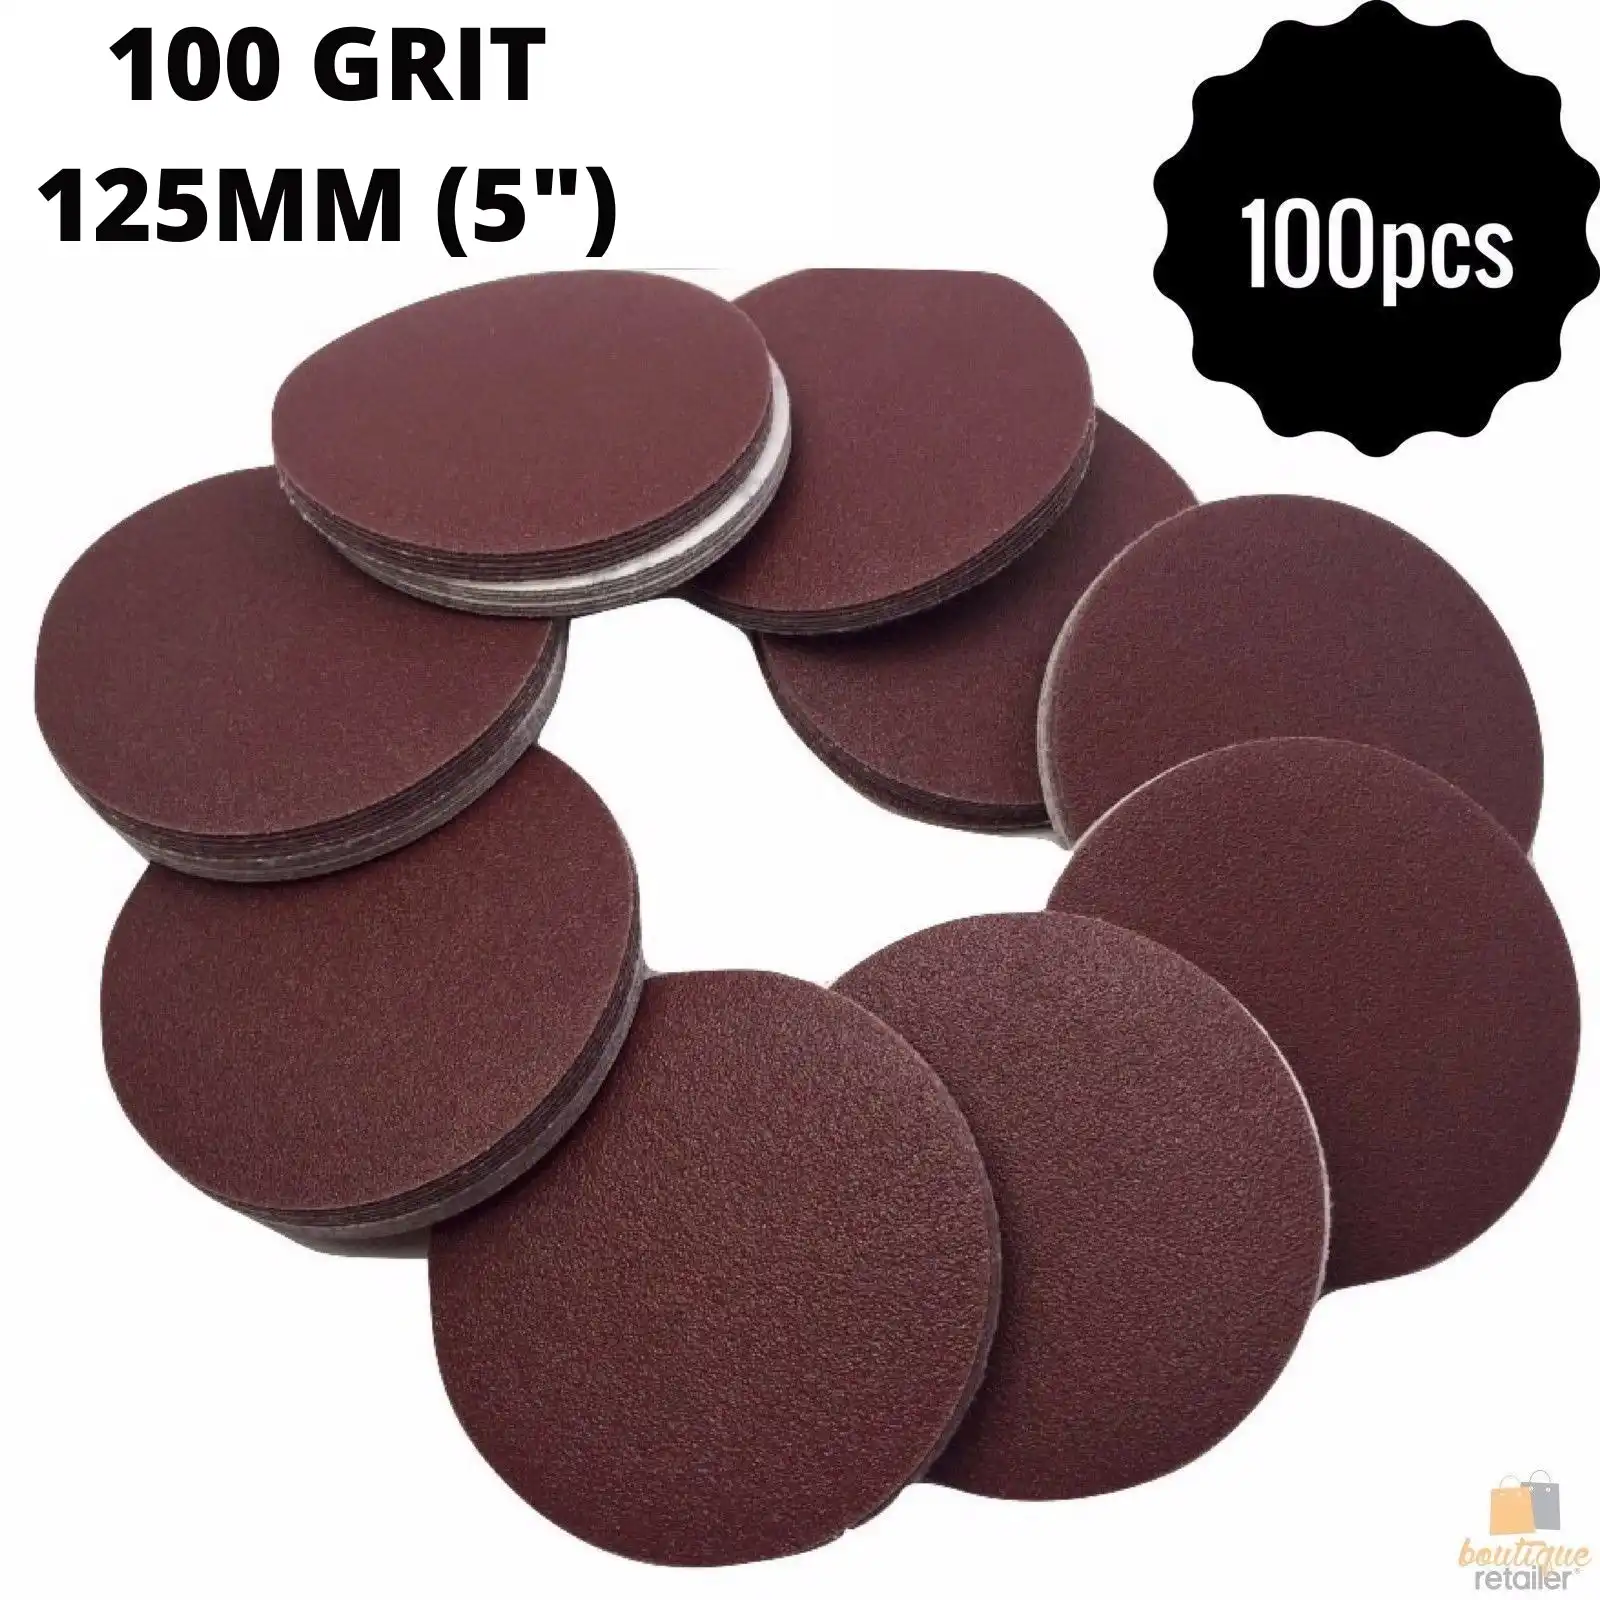 100pcs 125mm 5" Sandpaper Discs 100 Grit Sanding Sheets Sand Paper BULK